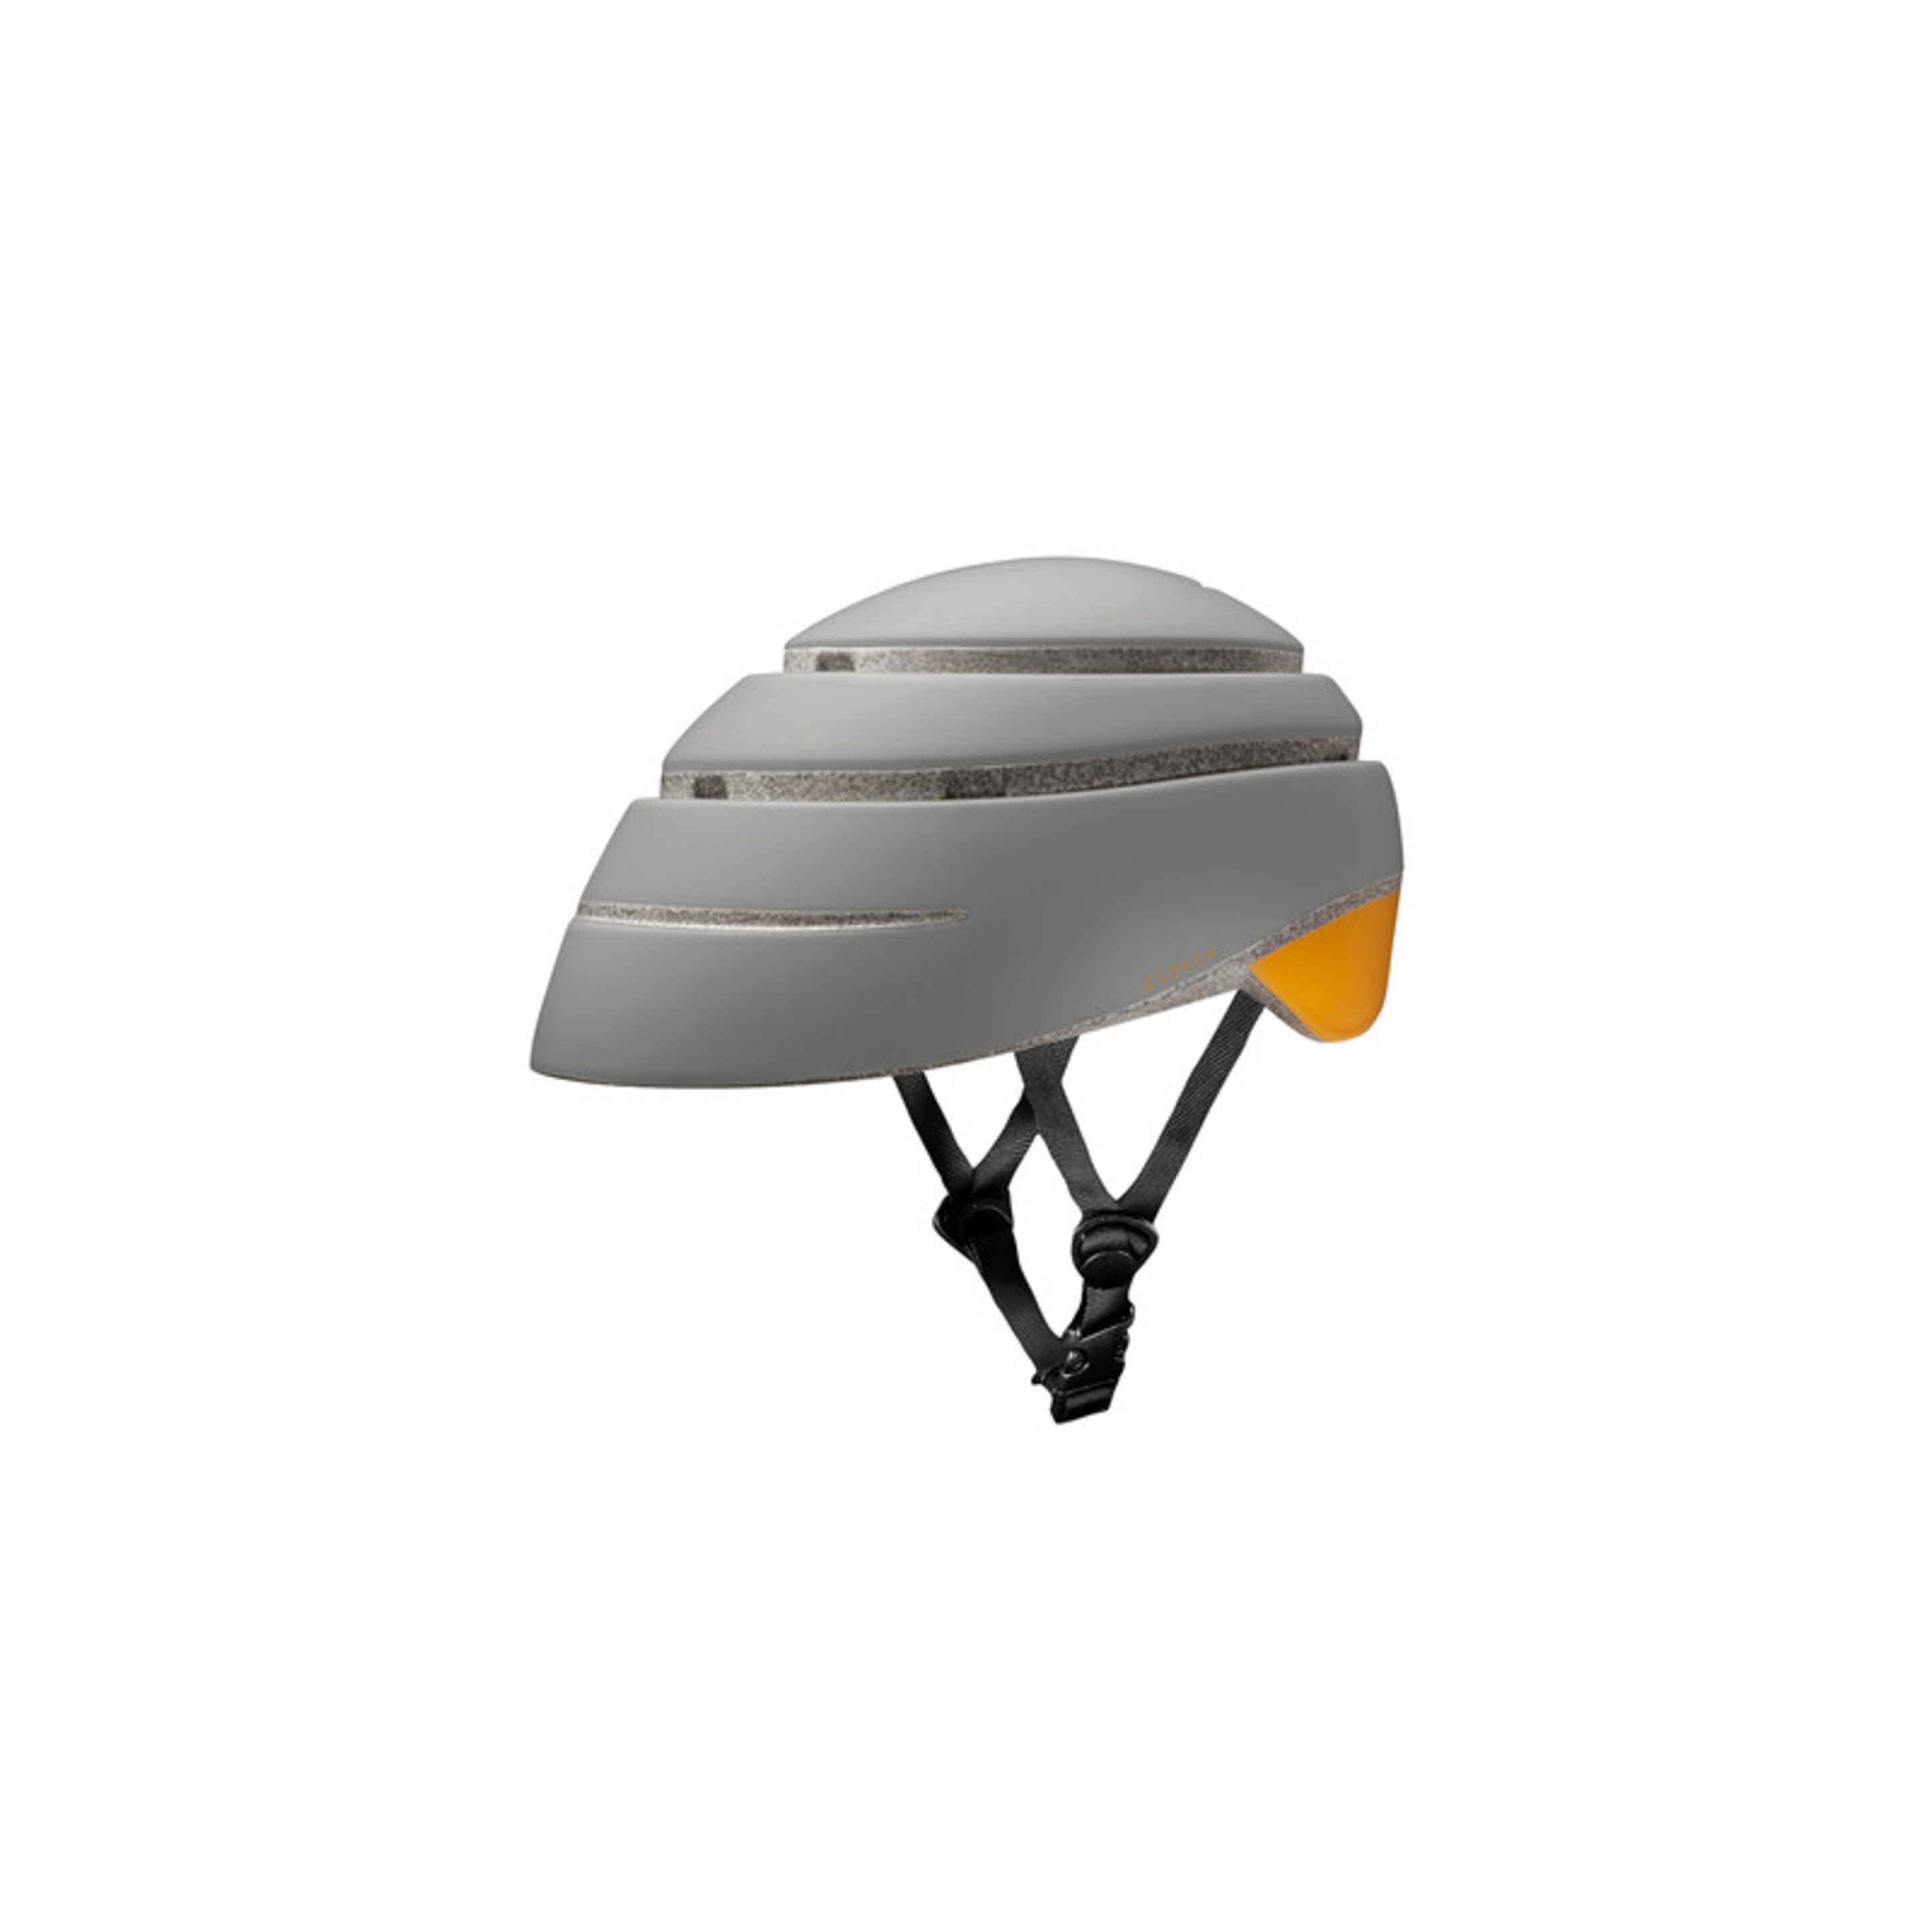 Capacete Dobrável Para Bicicleta (Helmet Loop, Fossil / Mostarda) - Cinzento/Amarelo - Seguro, dobrável e estilo urbano. | Sport Zone MKP